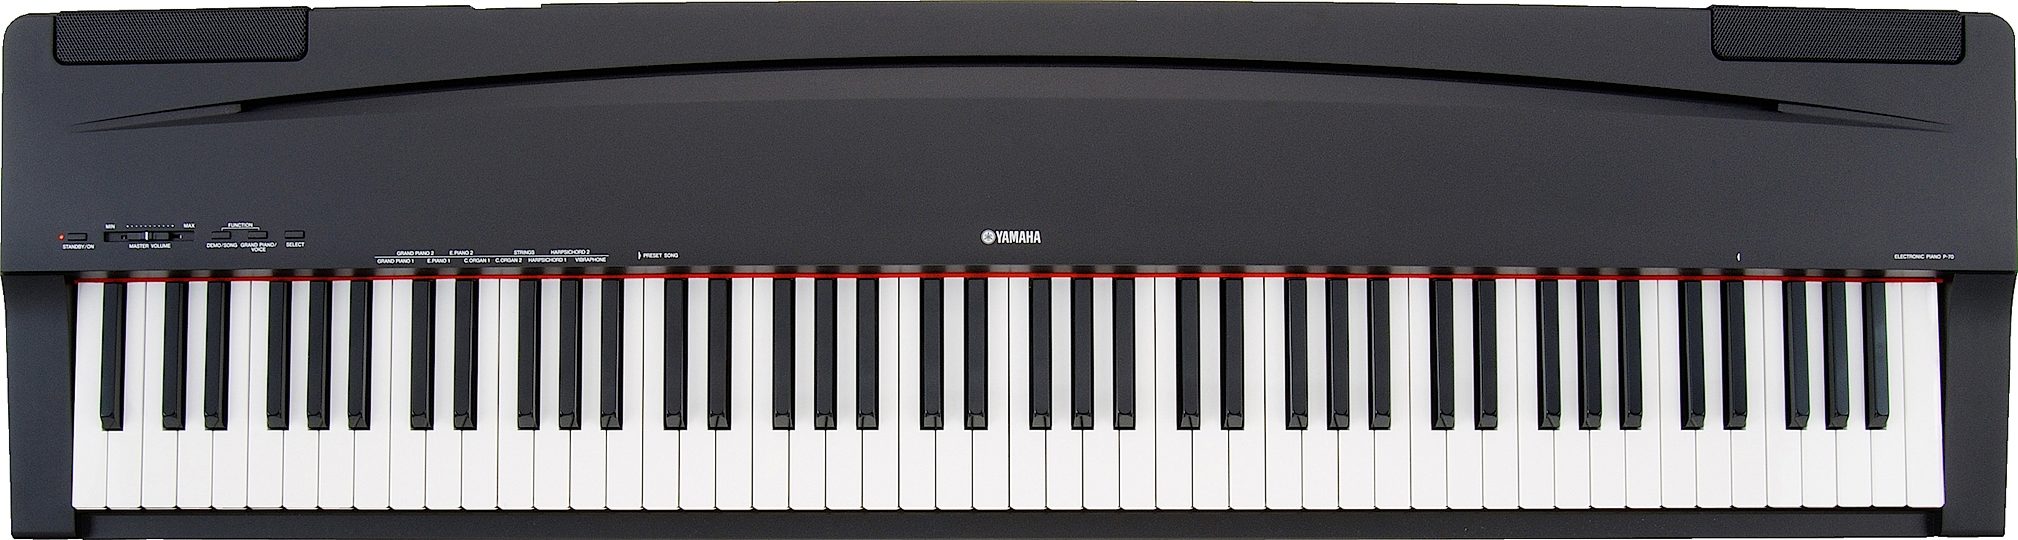 Yamaha P70 Digital Piano | zZounds